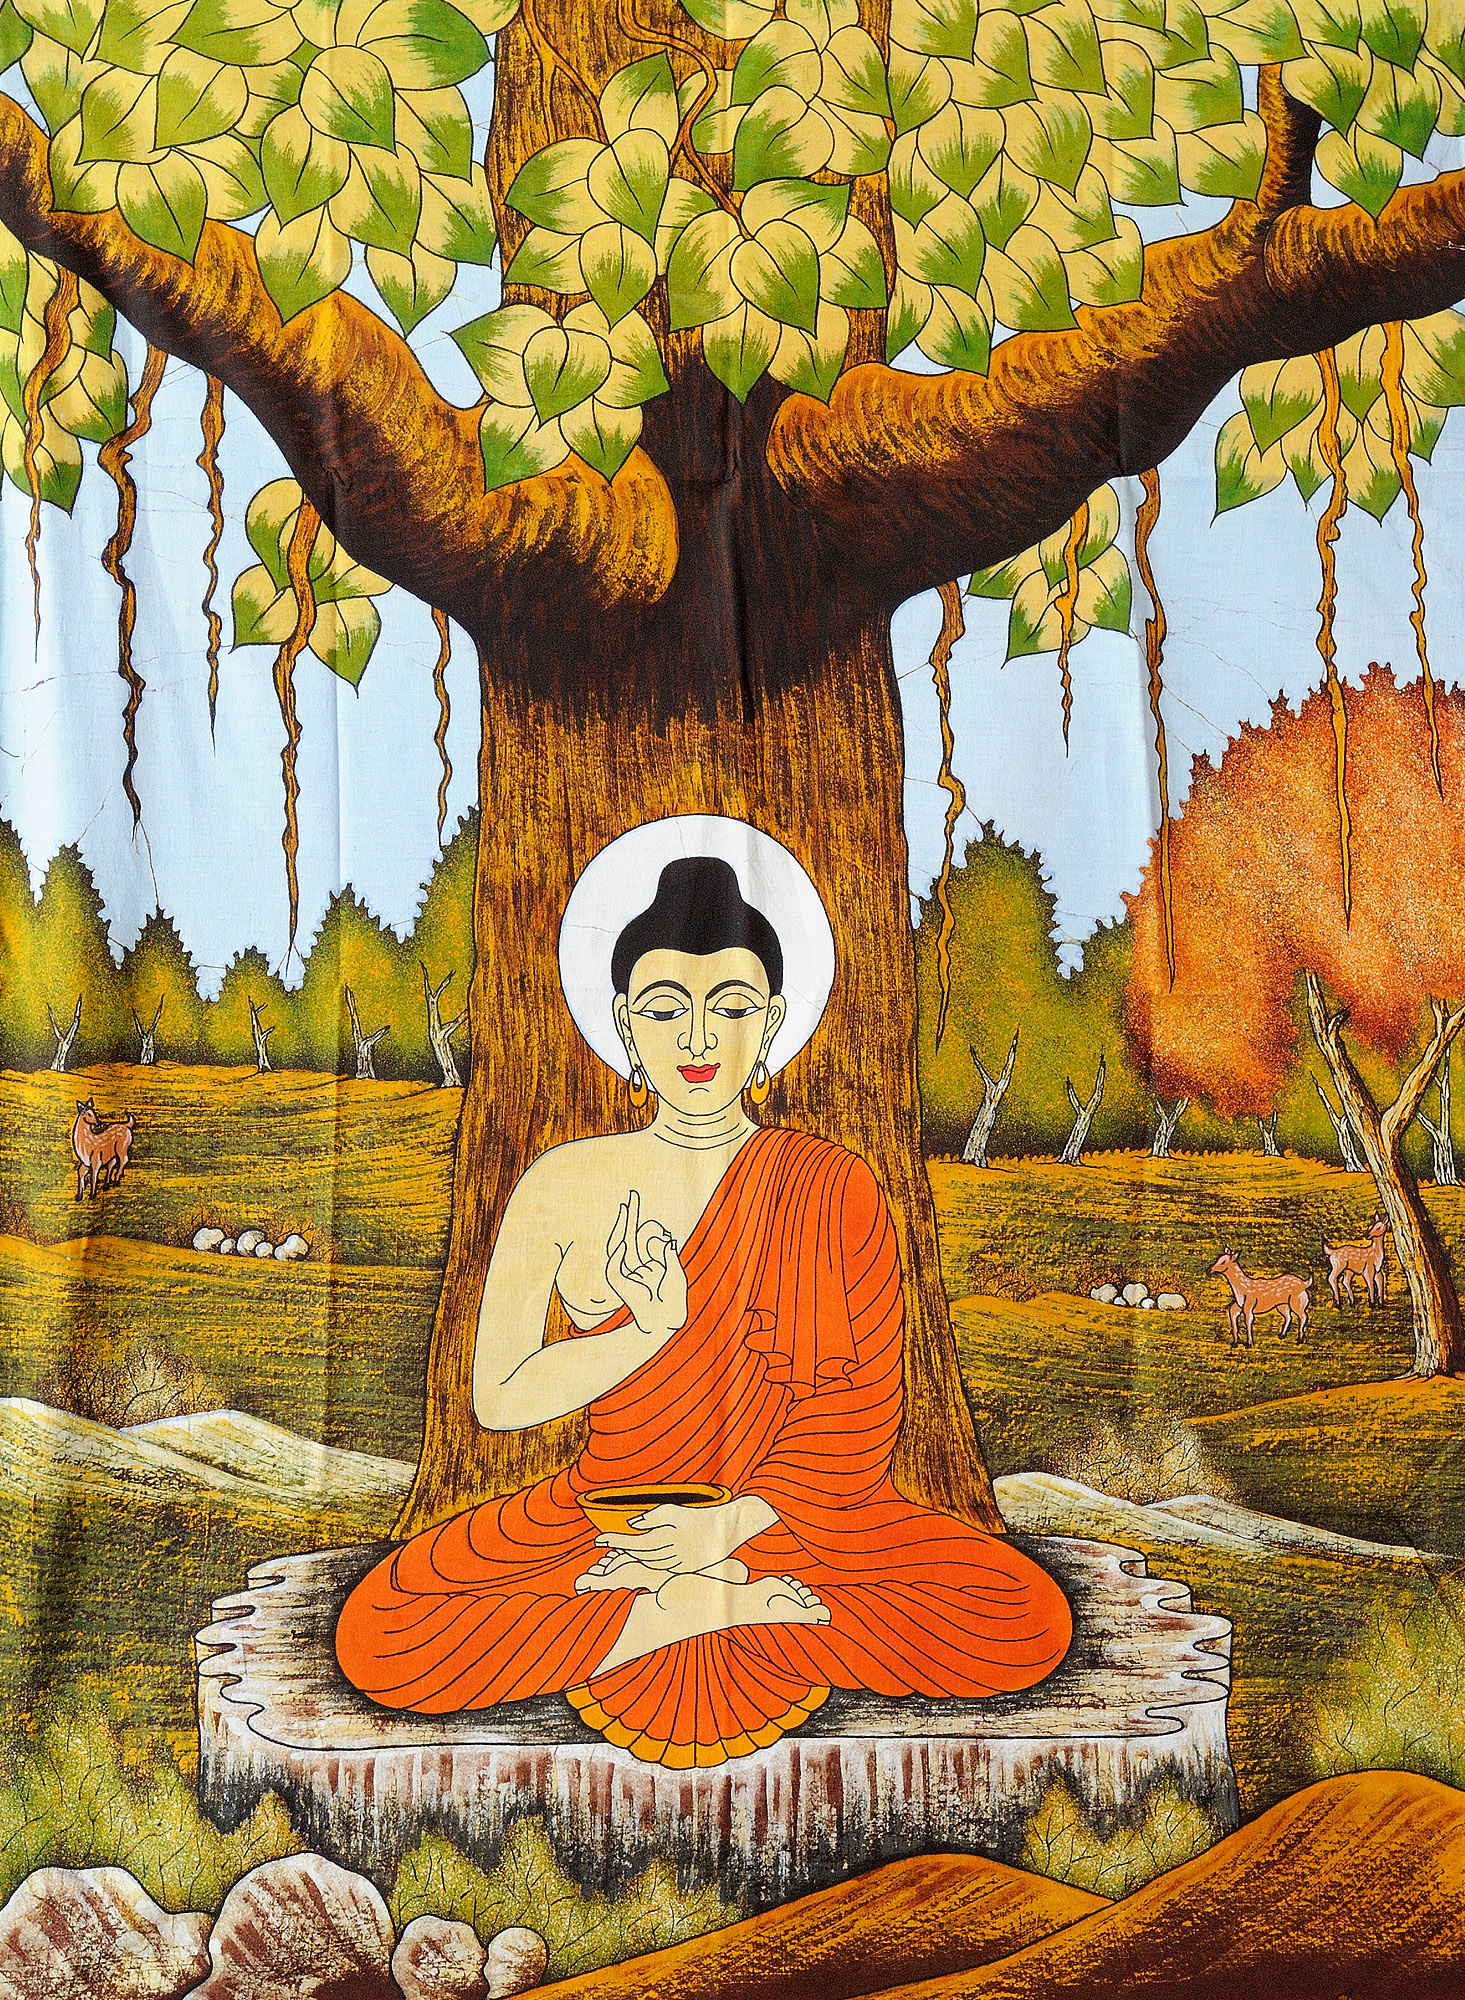 The sacred Bodhi tree